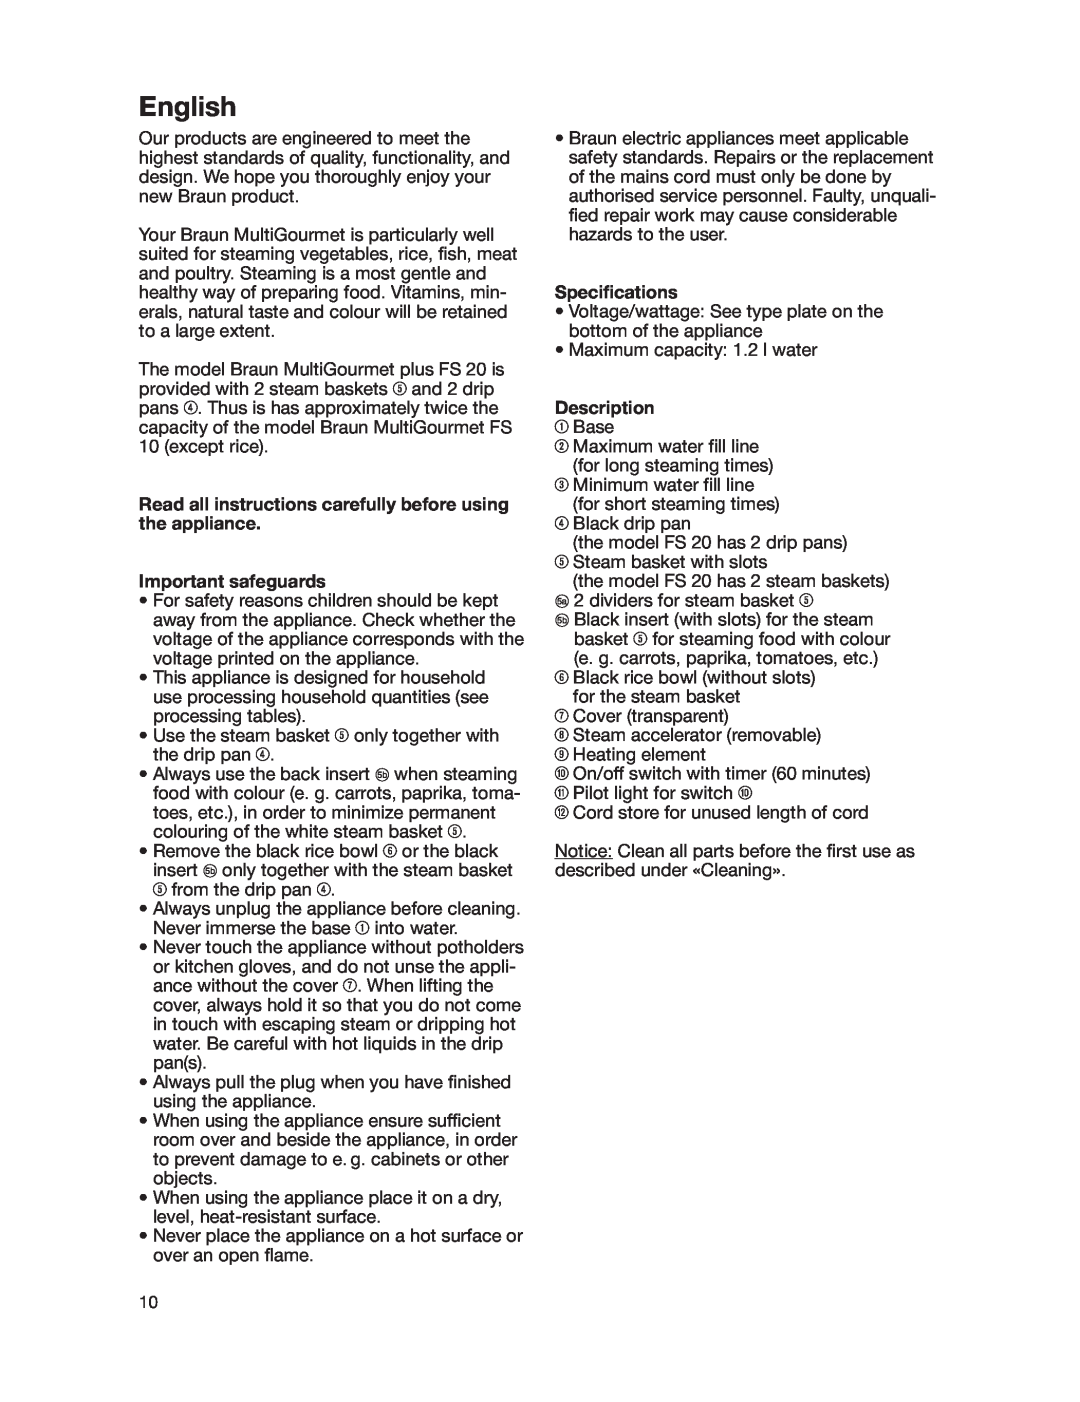 Braun FS10, FS20 manual English, Important safeguards, Specifications, Description 